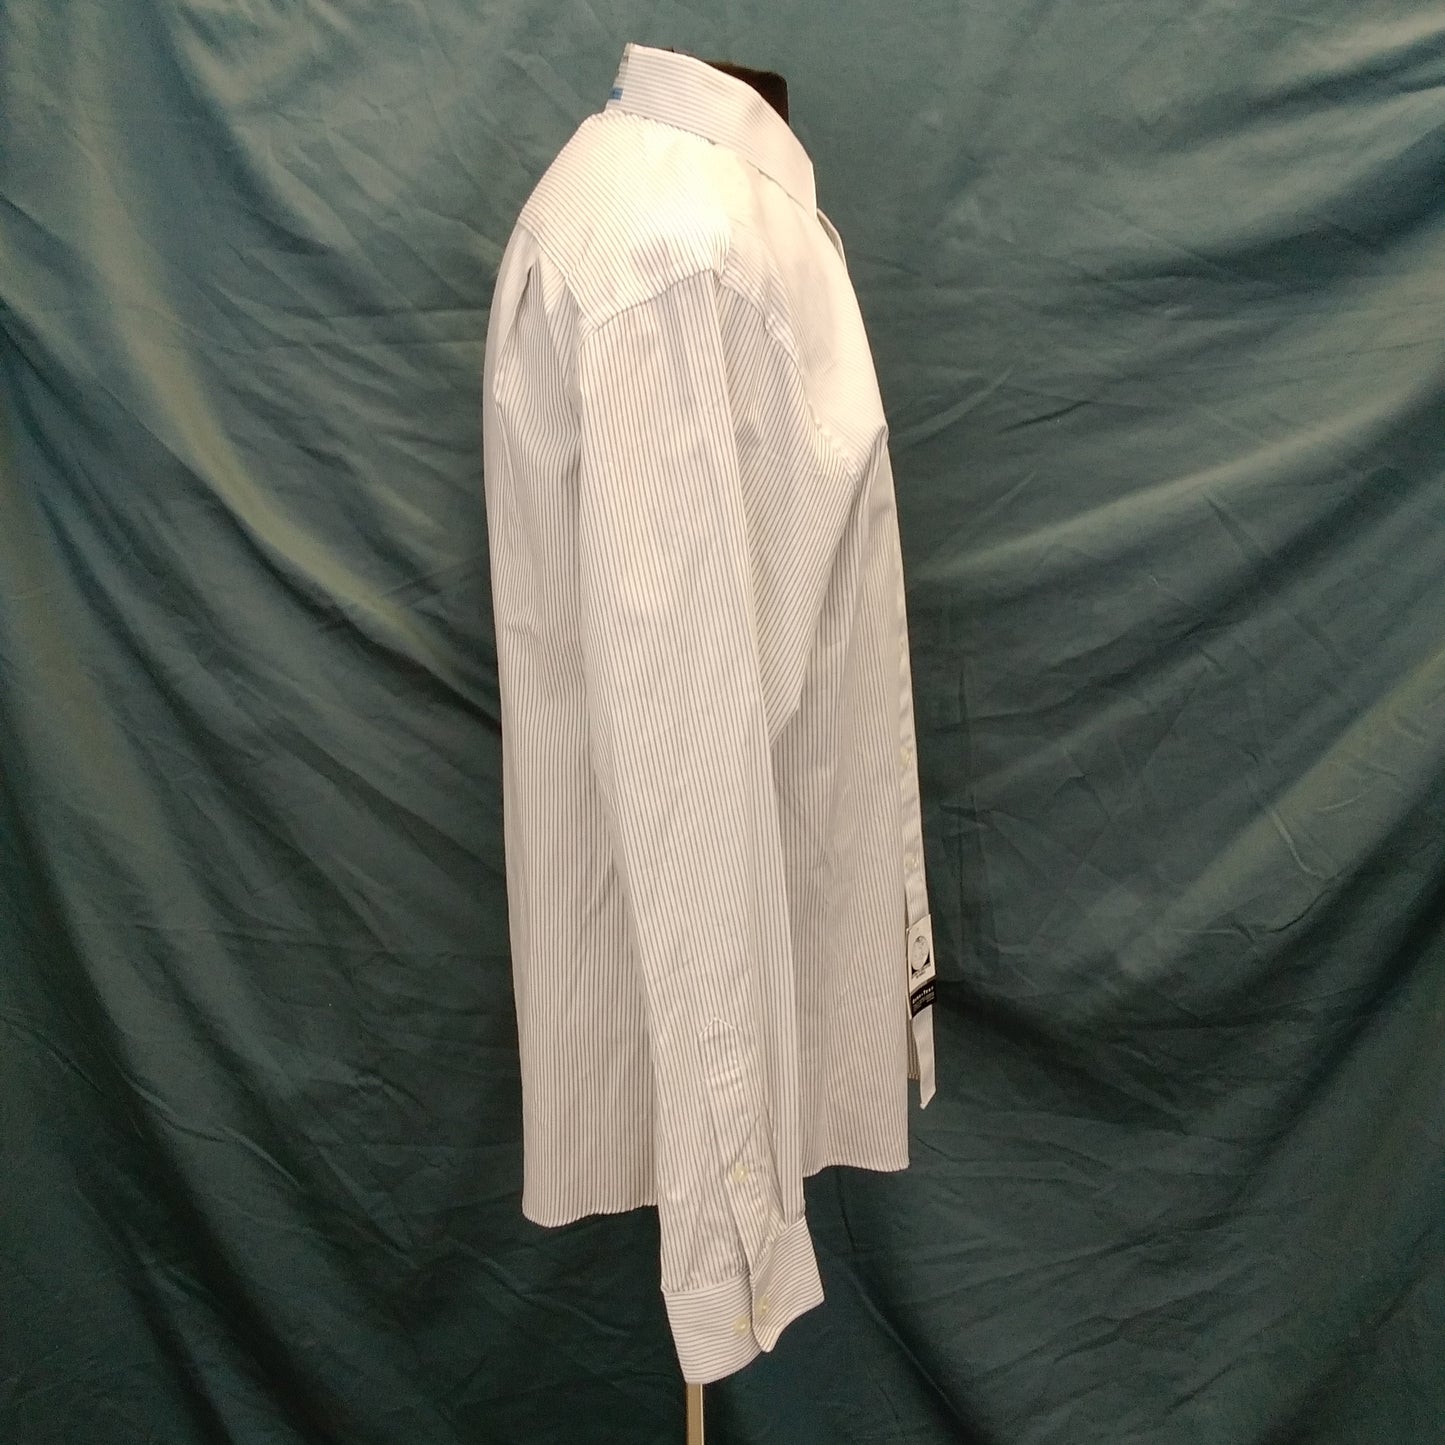 NWT - Van Heusen White Studio Slim Fit Button Down Shirt - 16.5 34-35